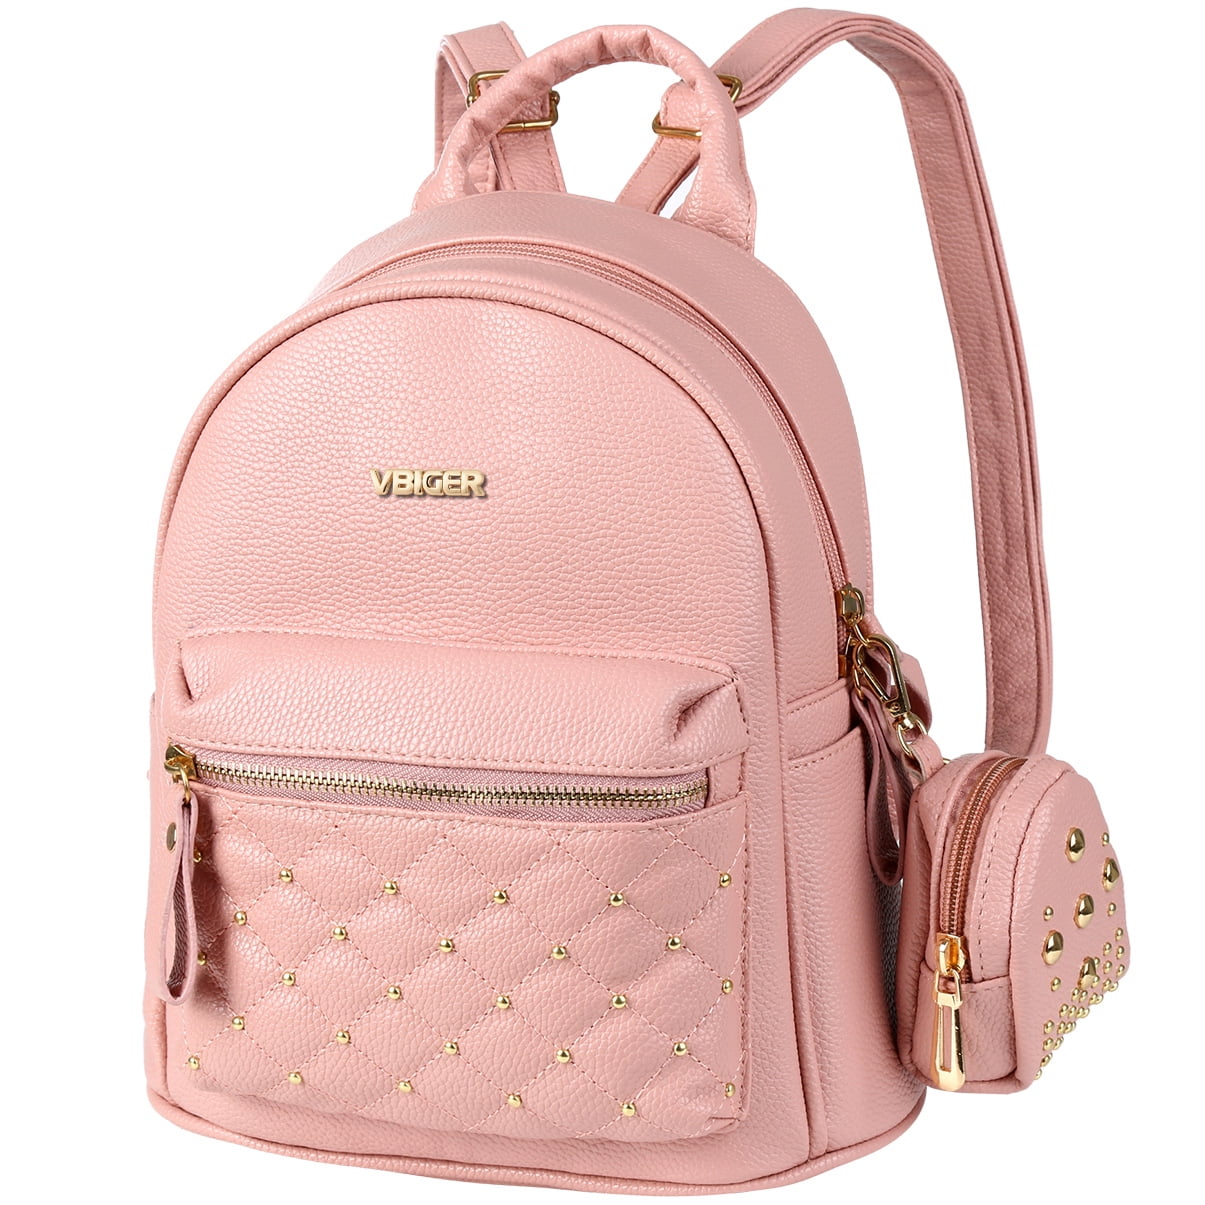 Women's Travel Backpack School Back Pack Mochila Escolar Bag PU Leather Rucksack 